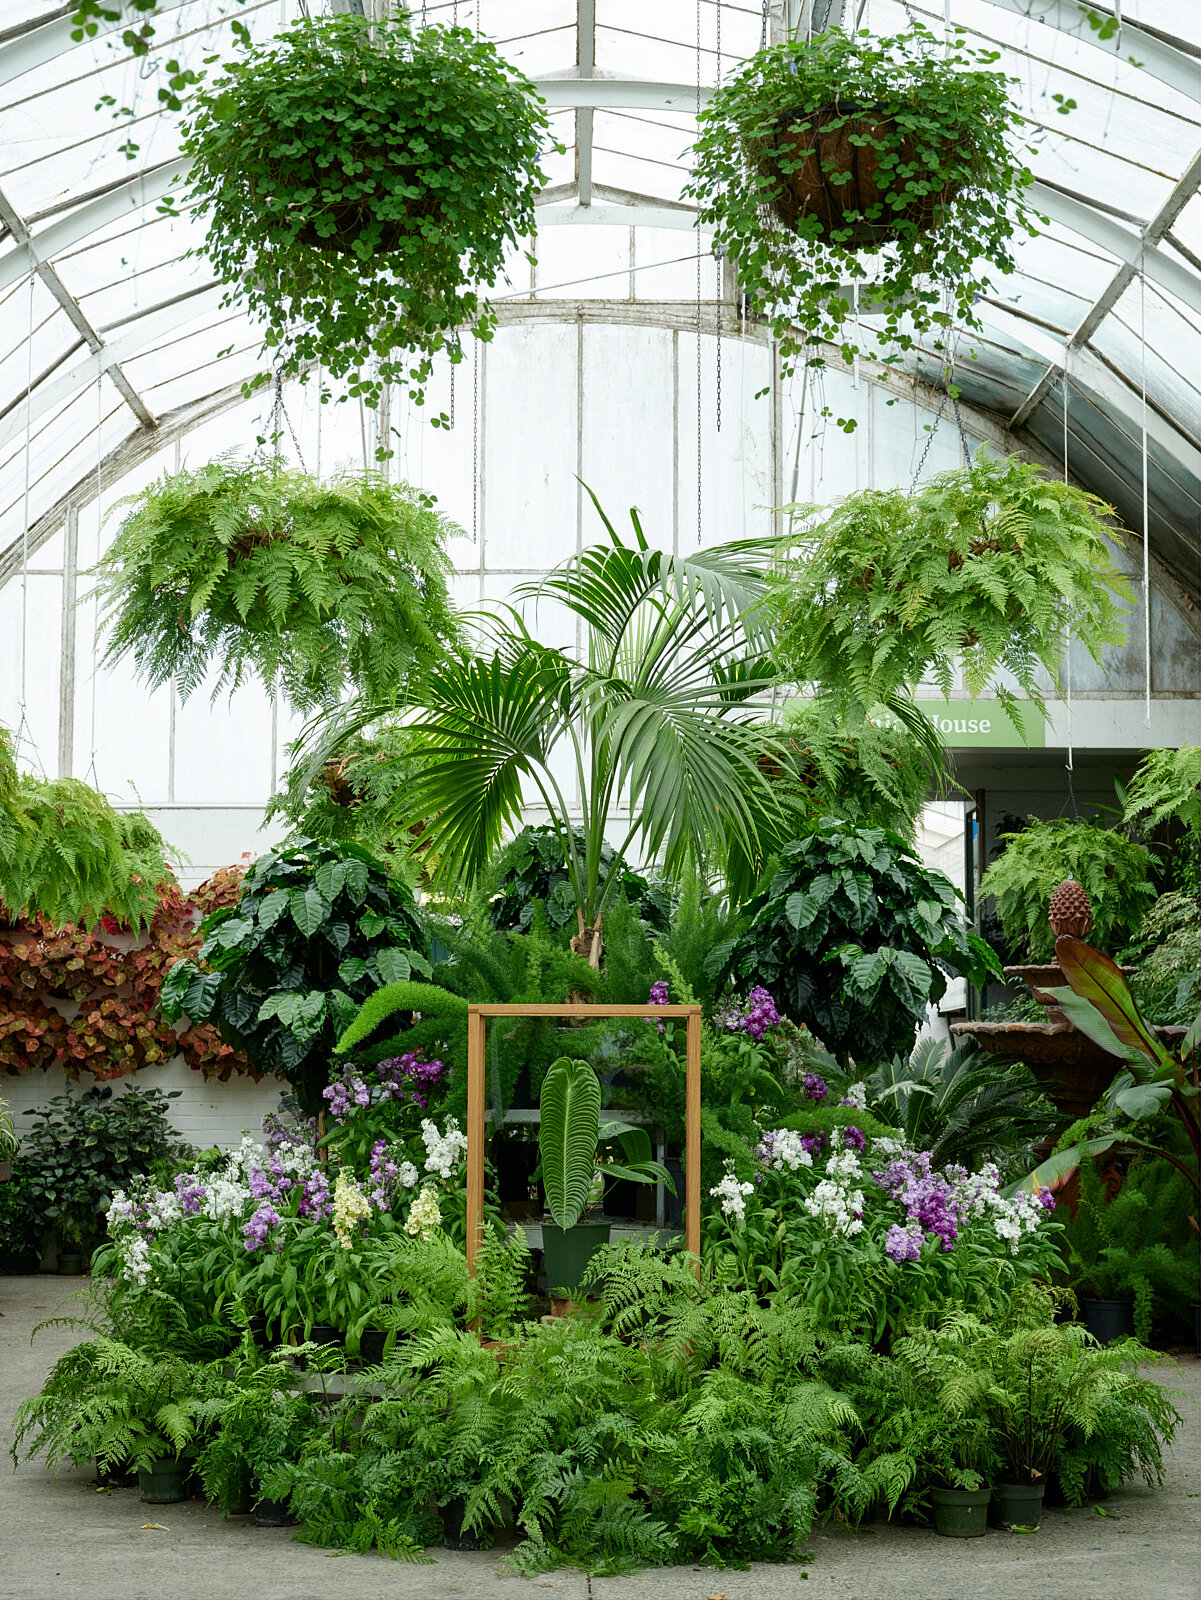   Christchurch Botanic Gardens - Glass house, ChCh 2020 1080 x 830mm  